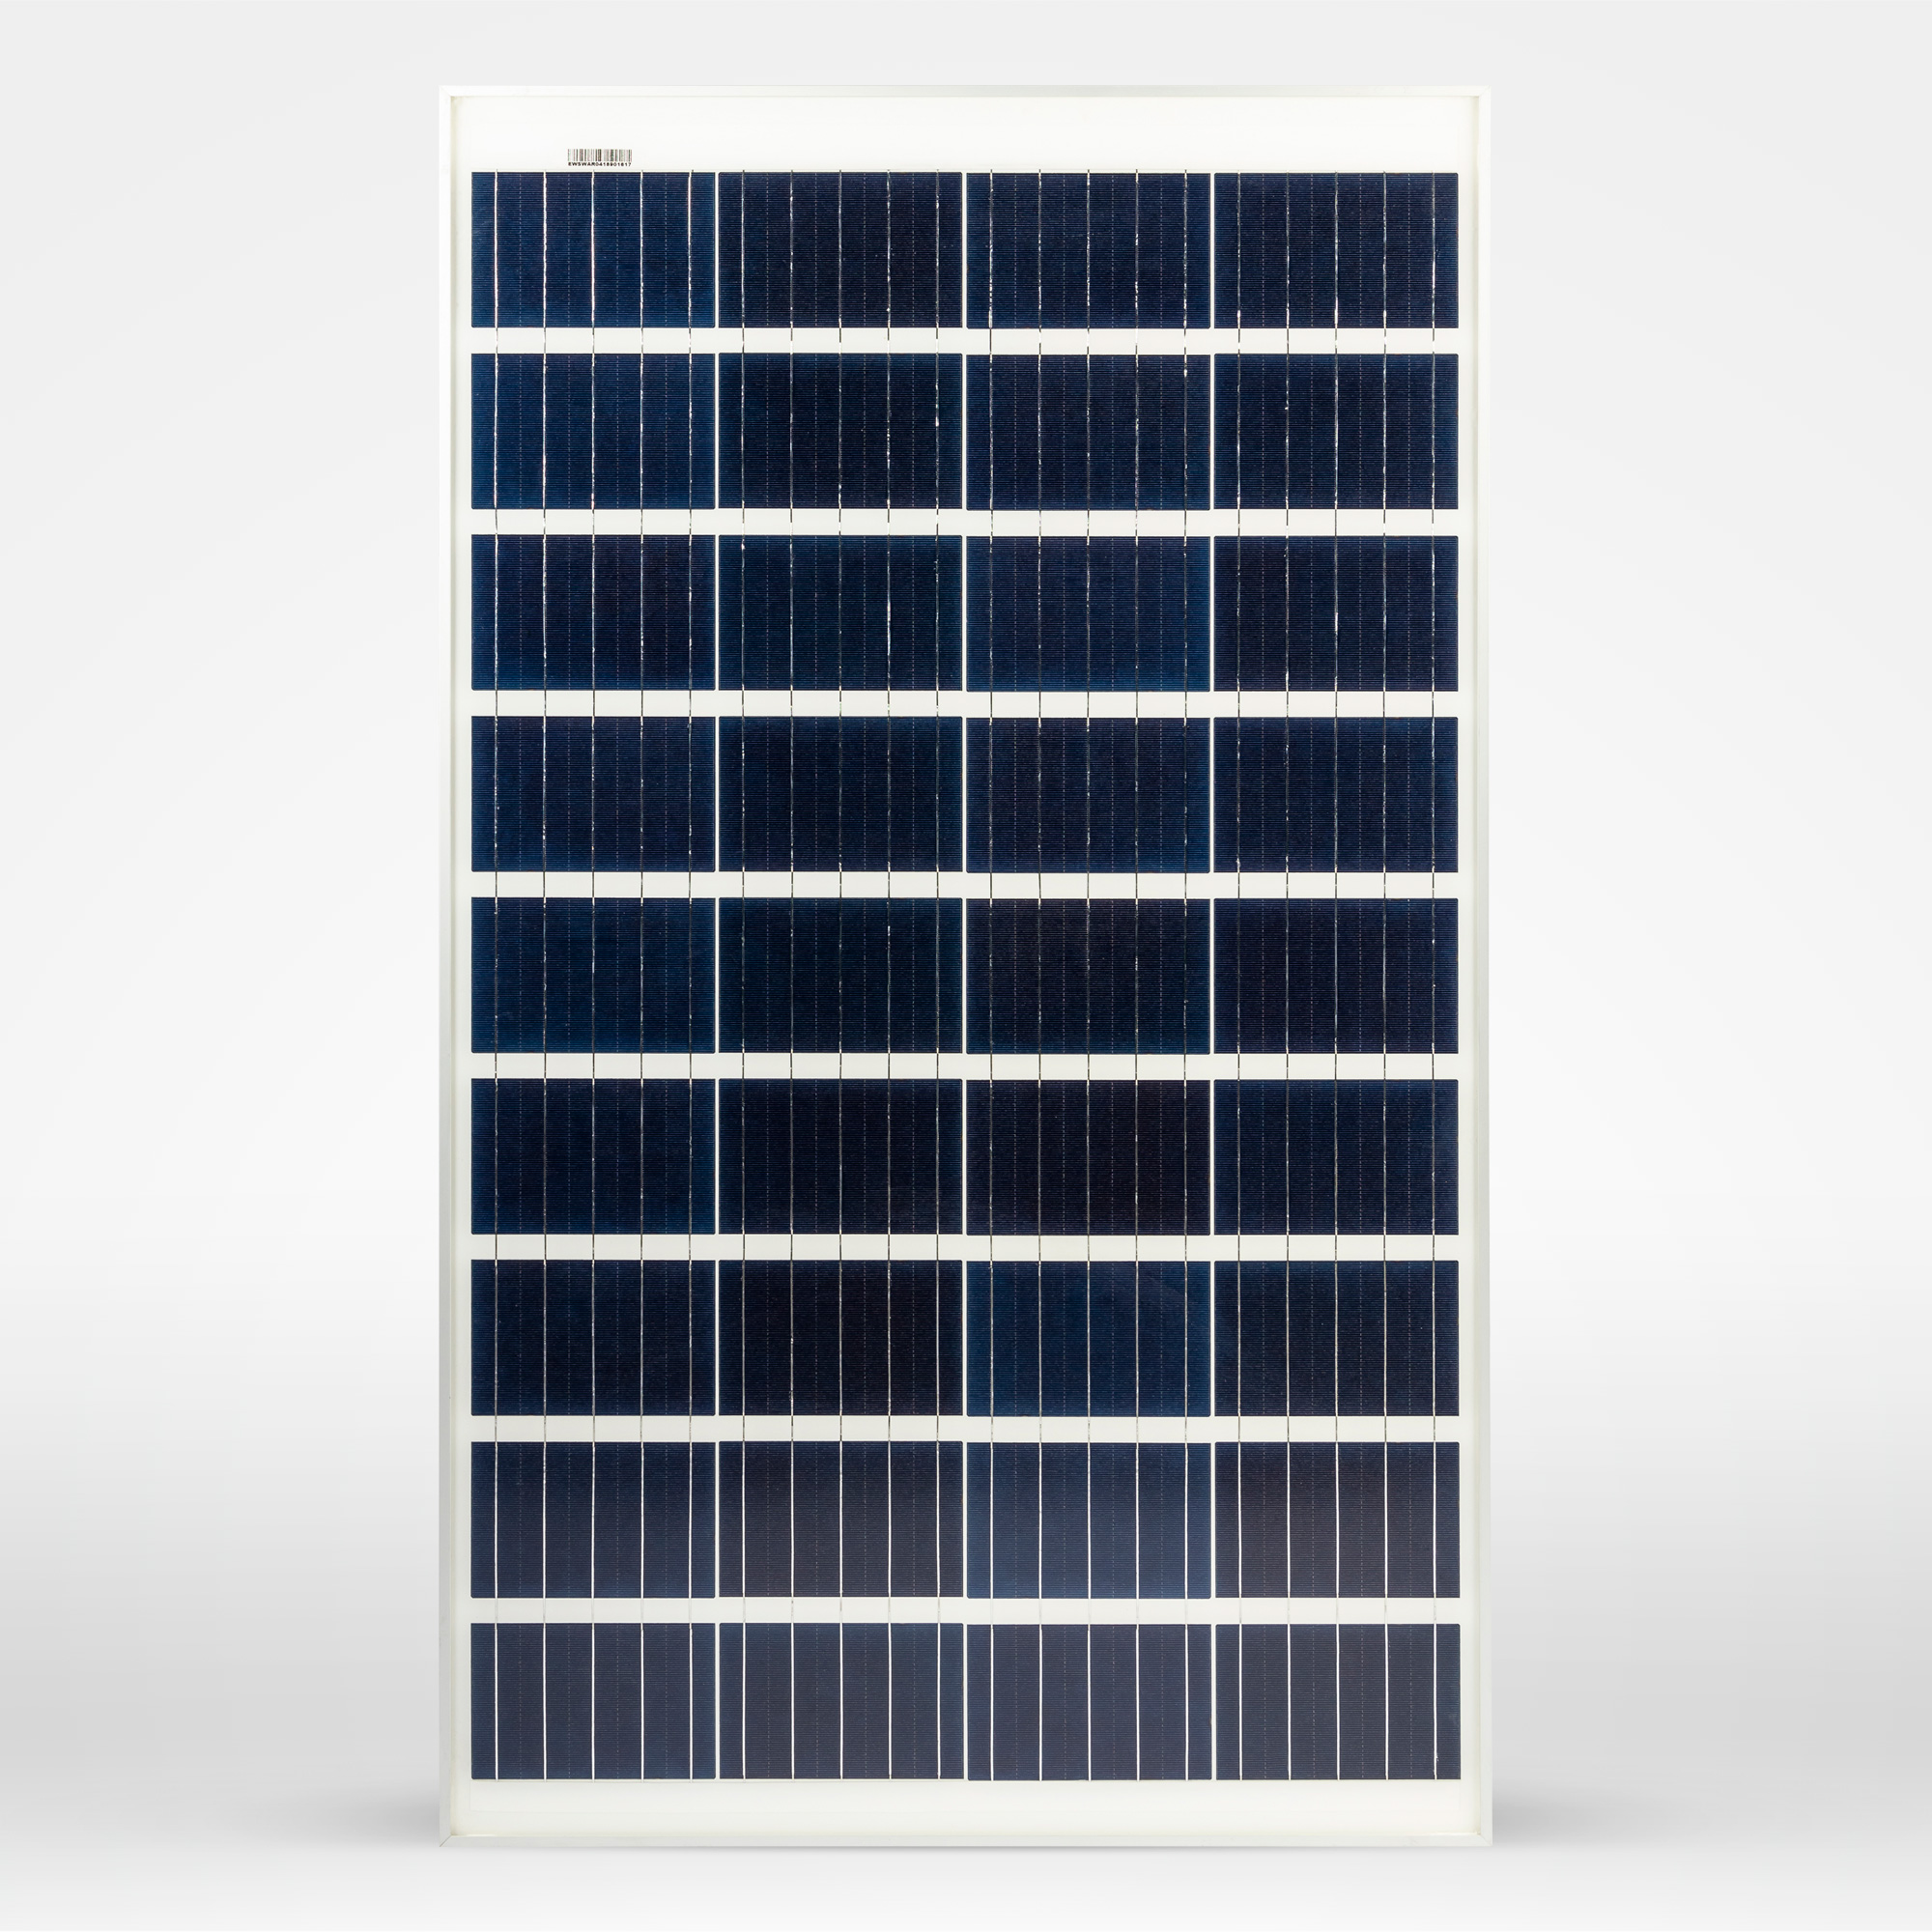 EWS-100P-36-I   Solar panel polycristalline 12V 100W